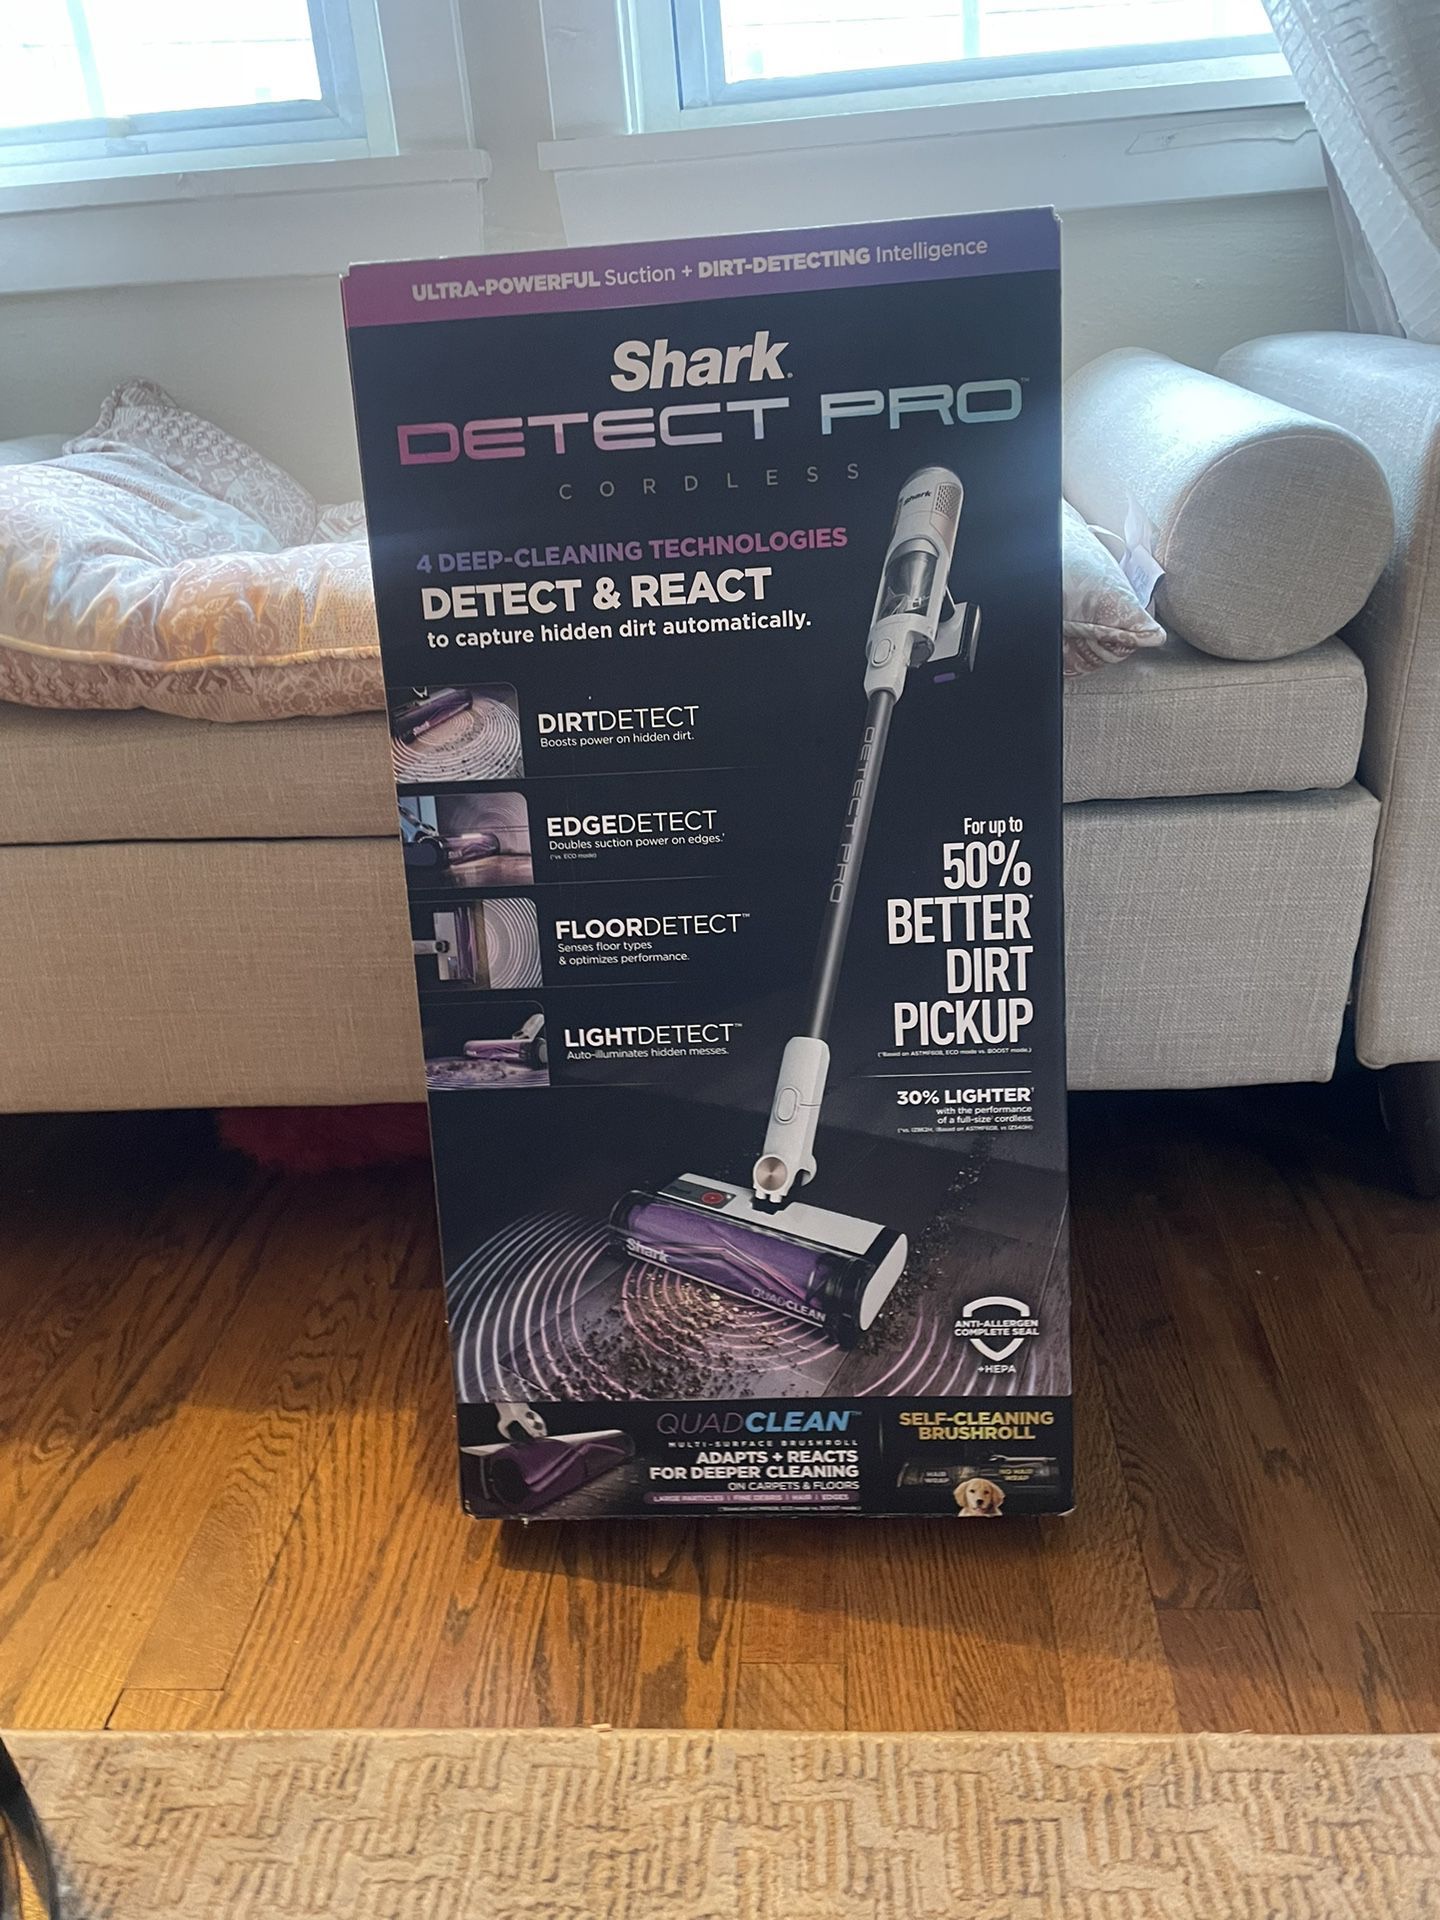 Brand new Shark Detect Pro